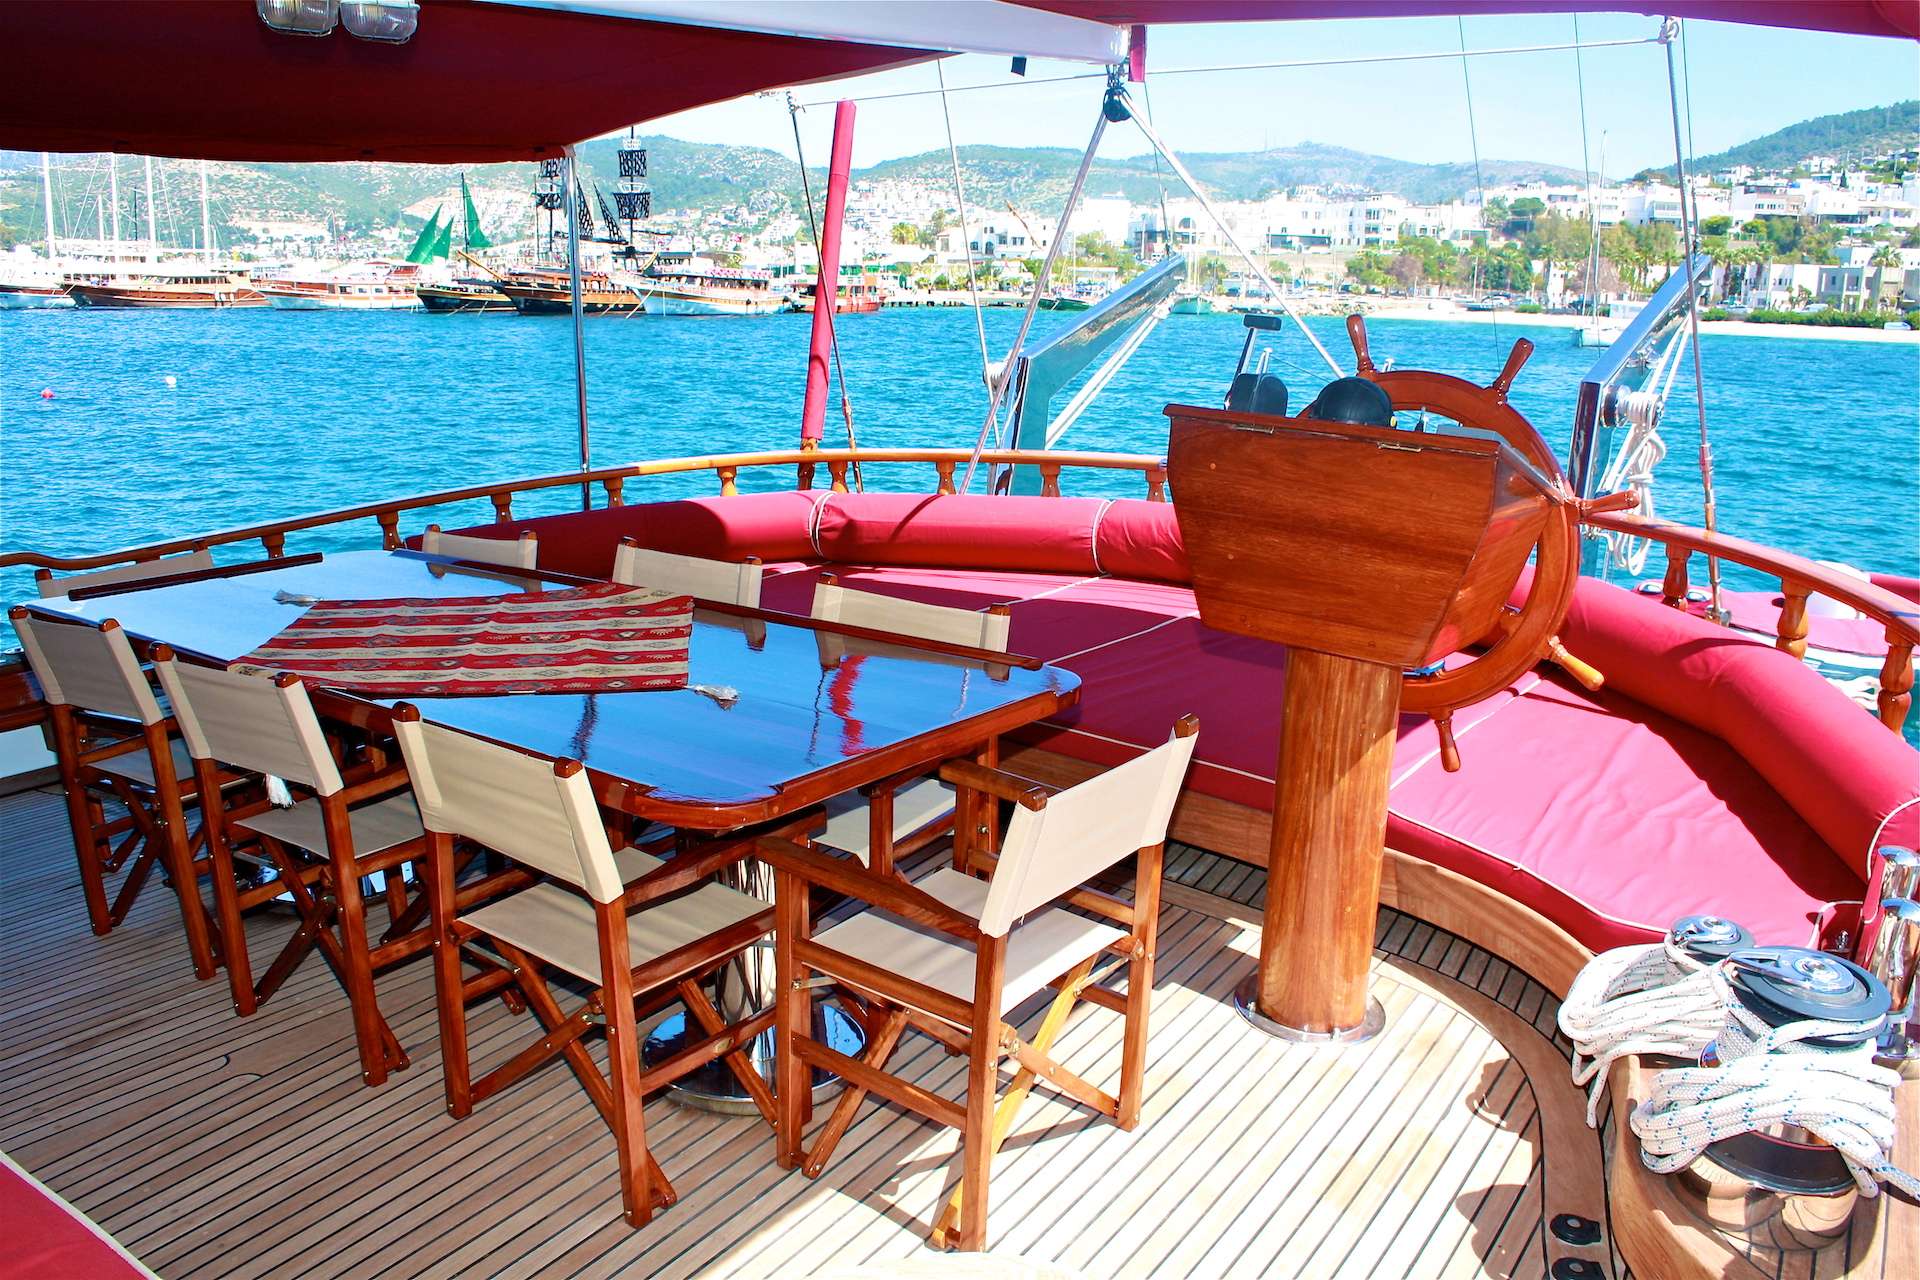 IL FRATELLO - Motor Boat Charter Turkey & Boat hire in Turkey 2